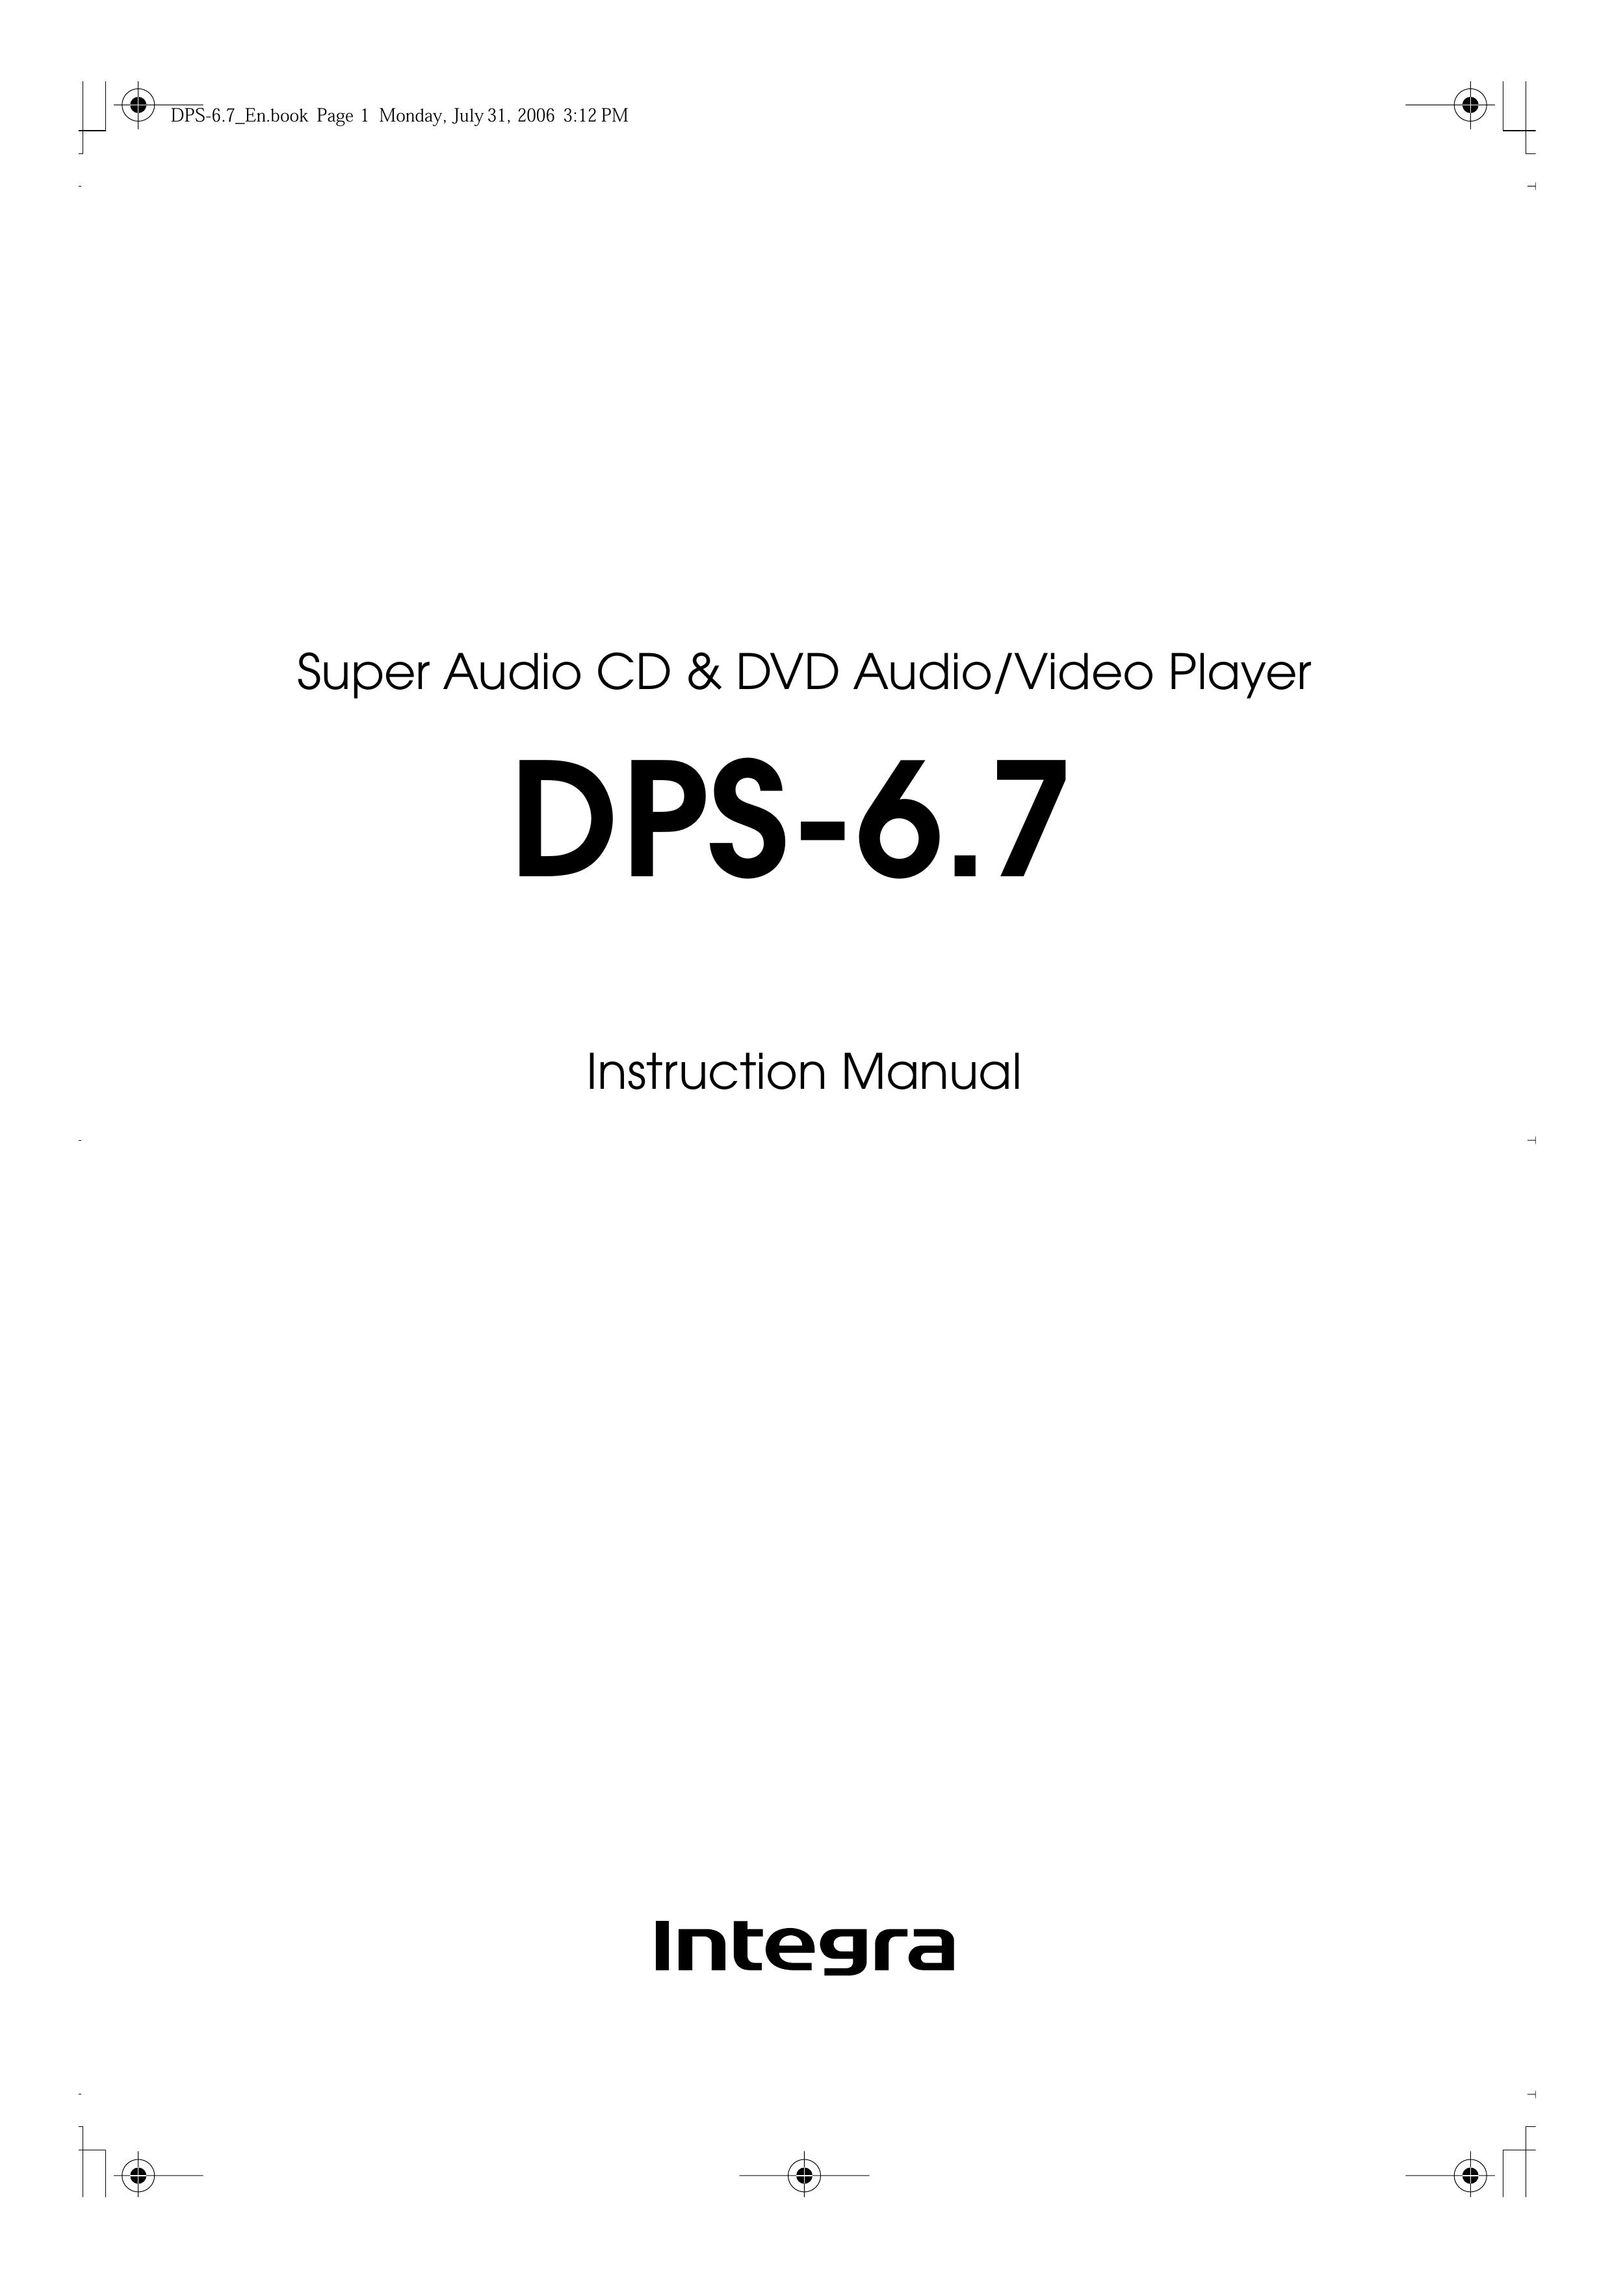 Integra DPS-6.7 DVD Player User Manual